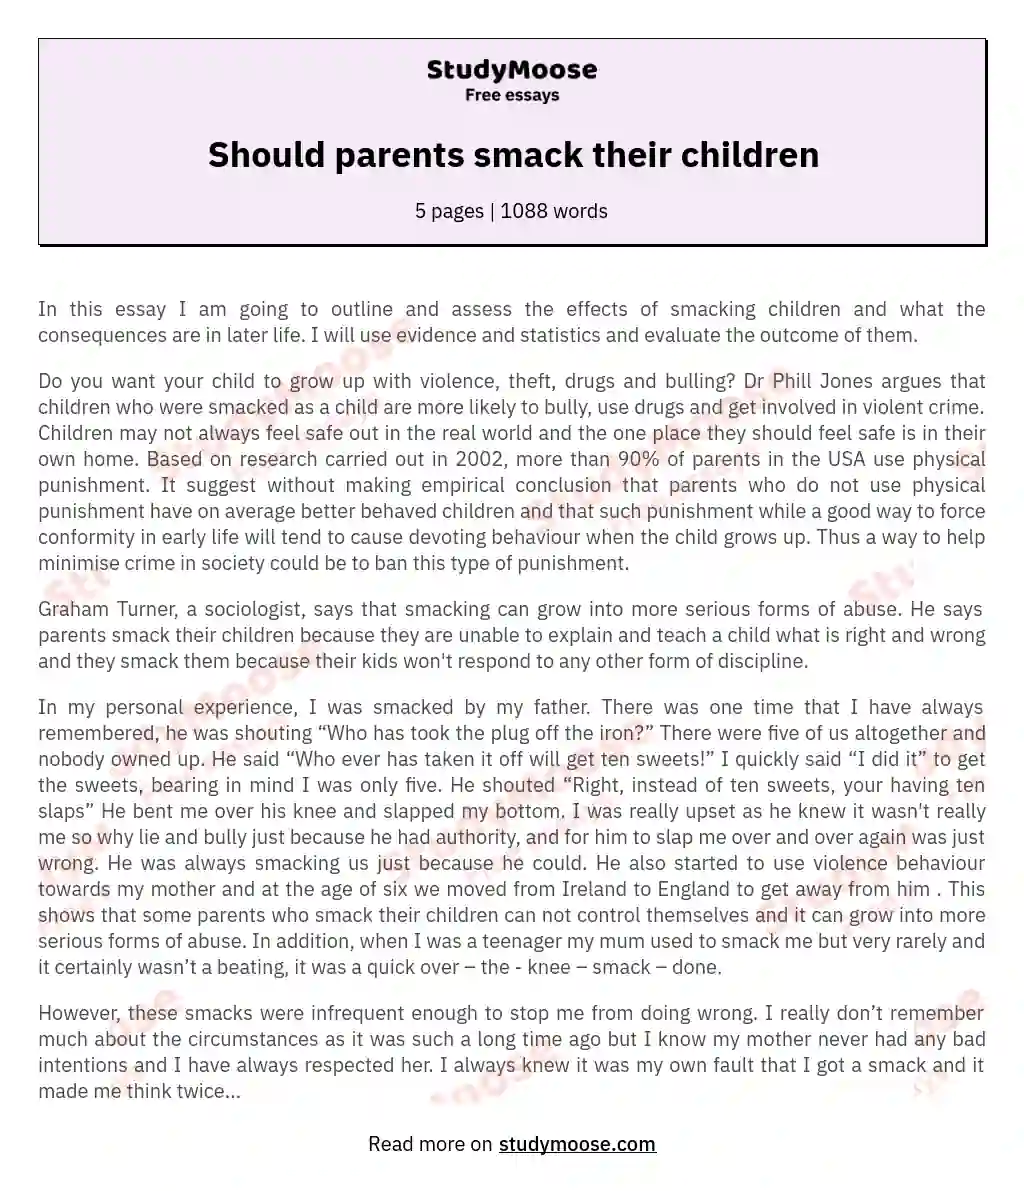 Should parents smack their children